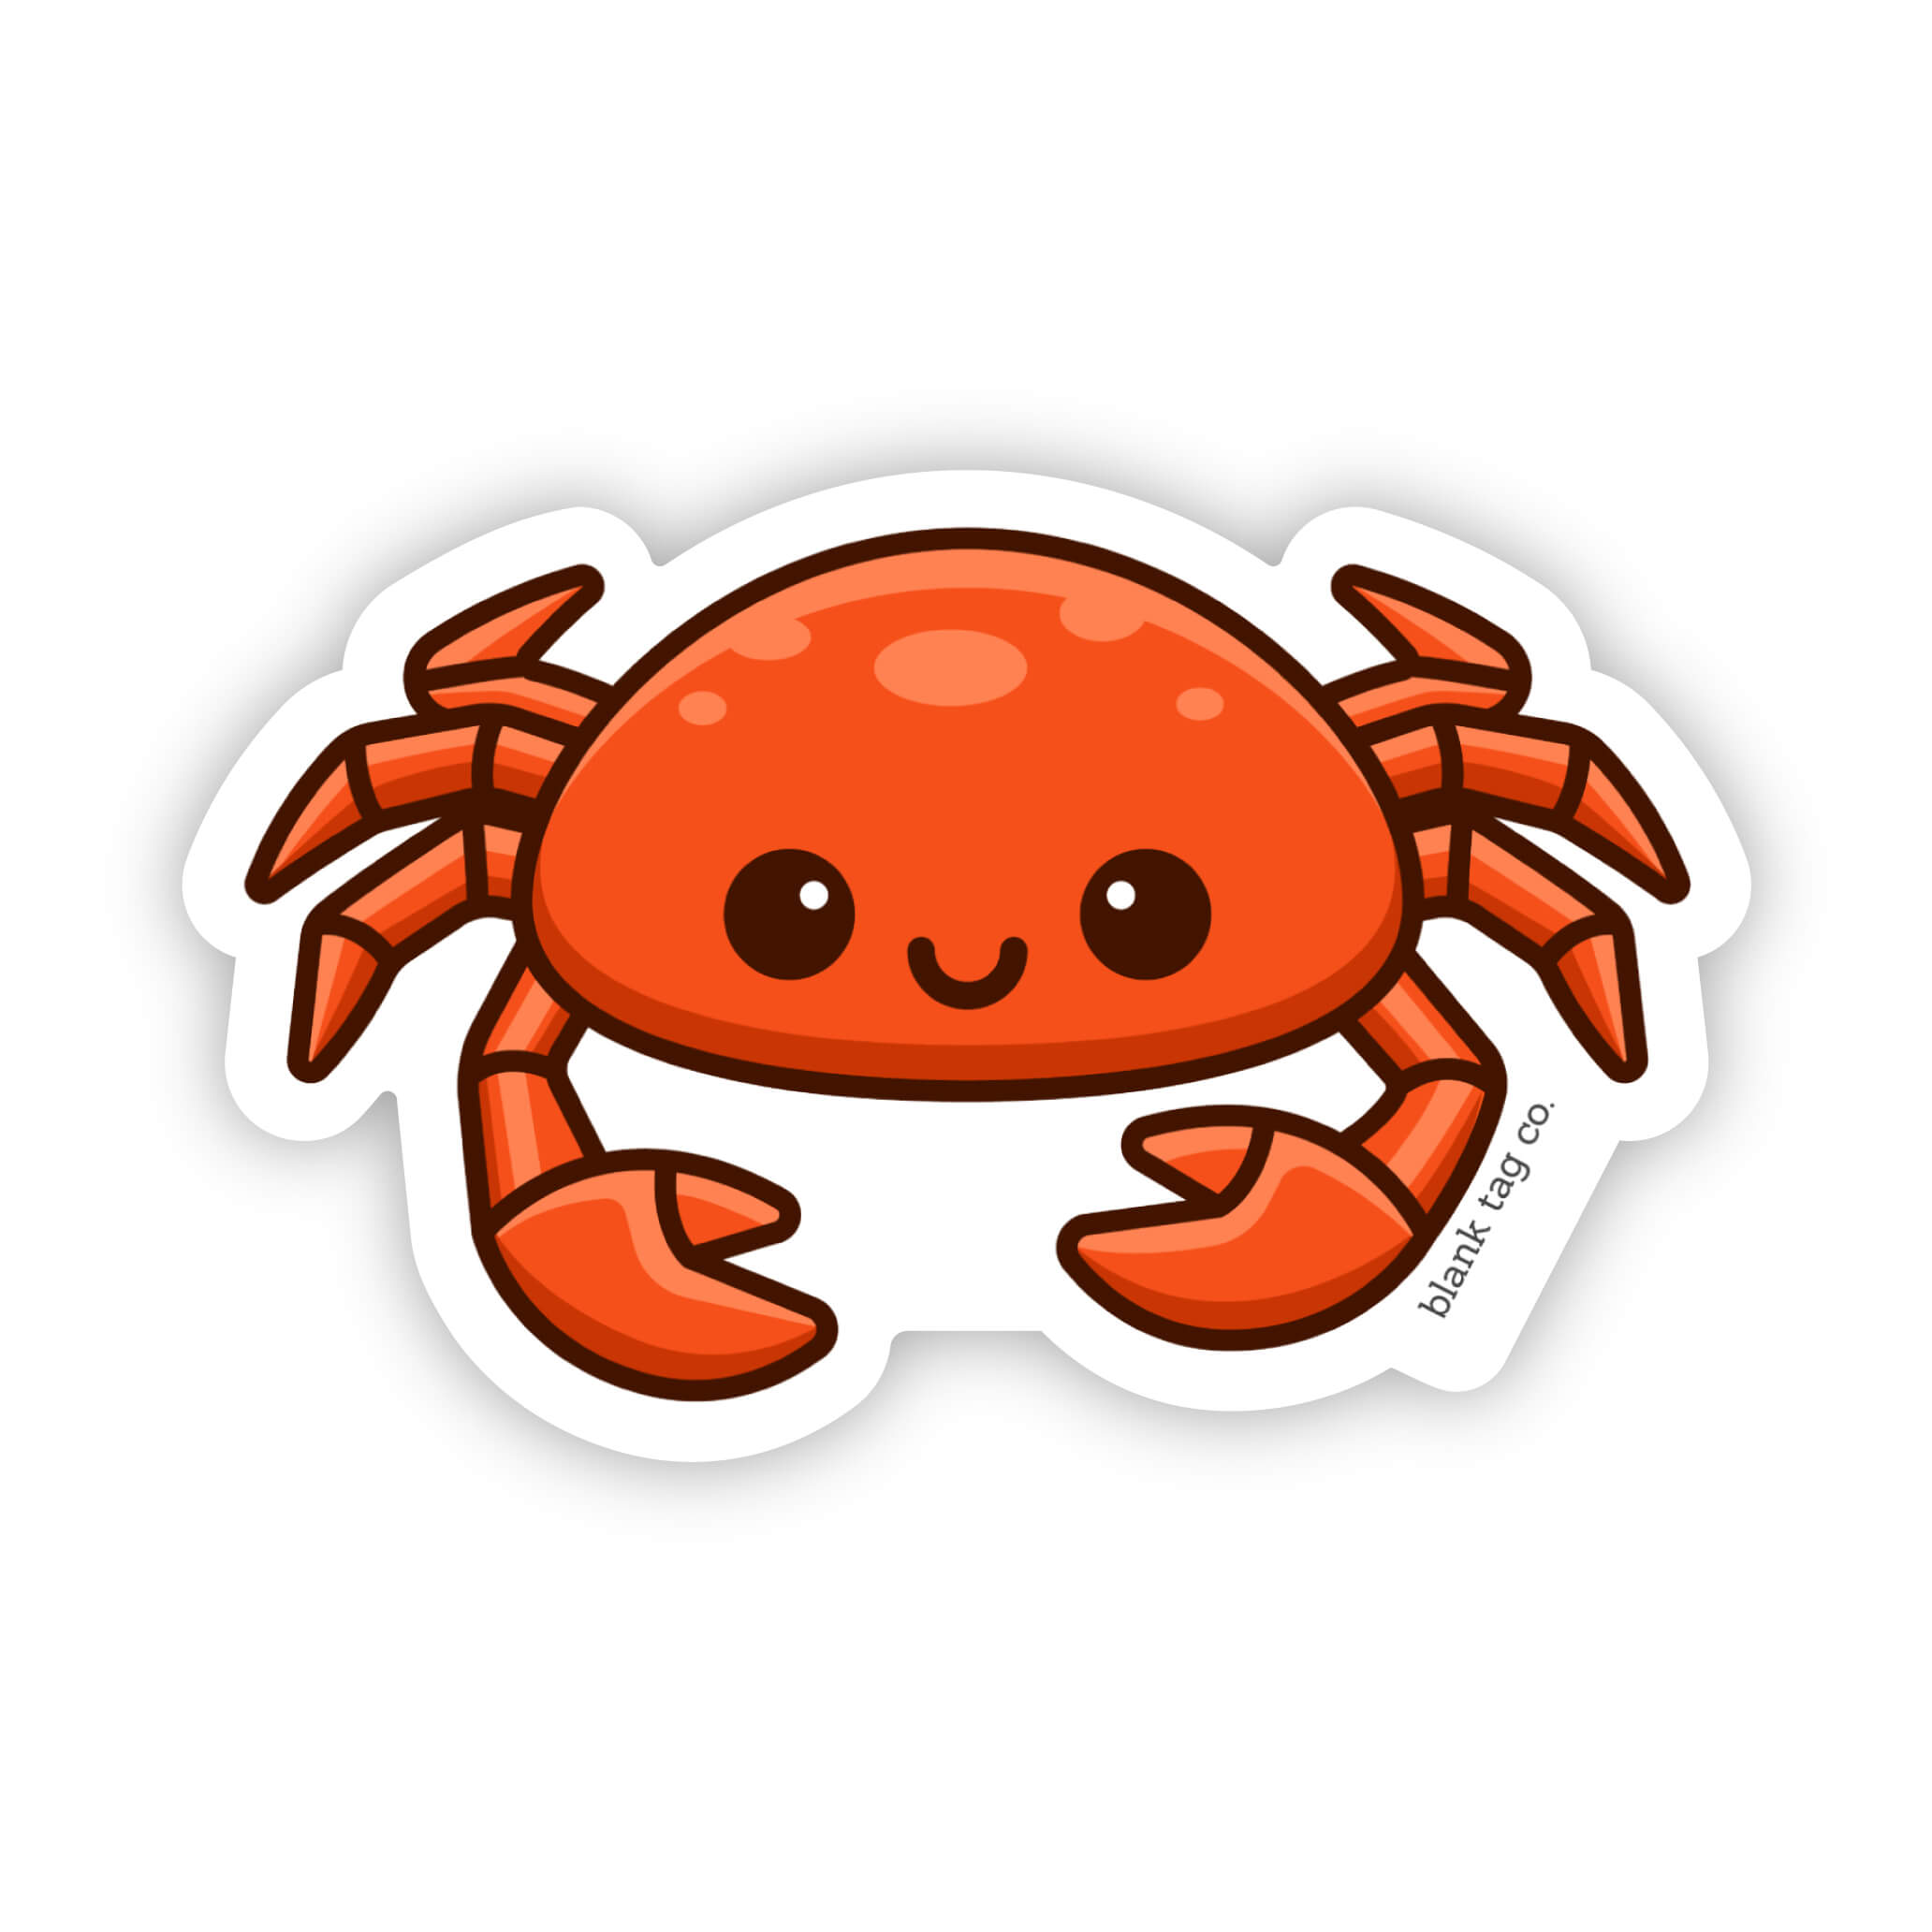 The Crab Sticker